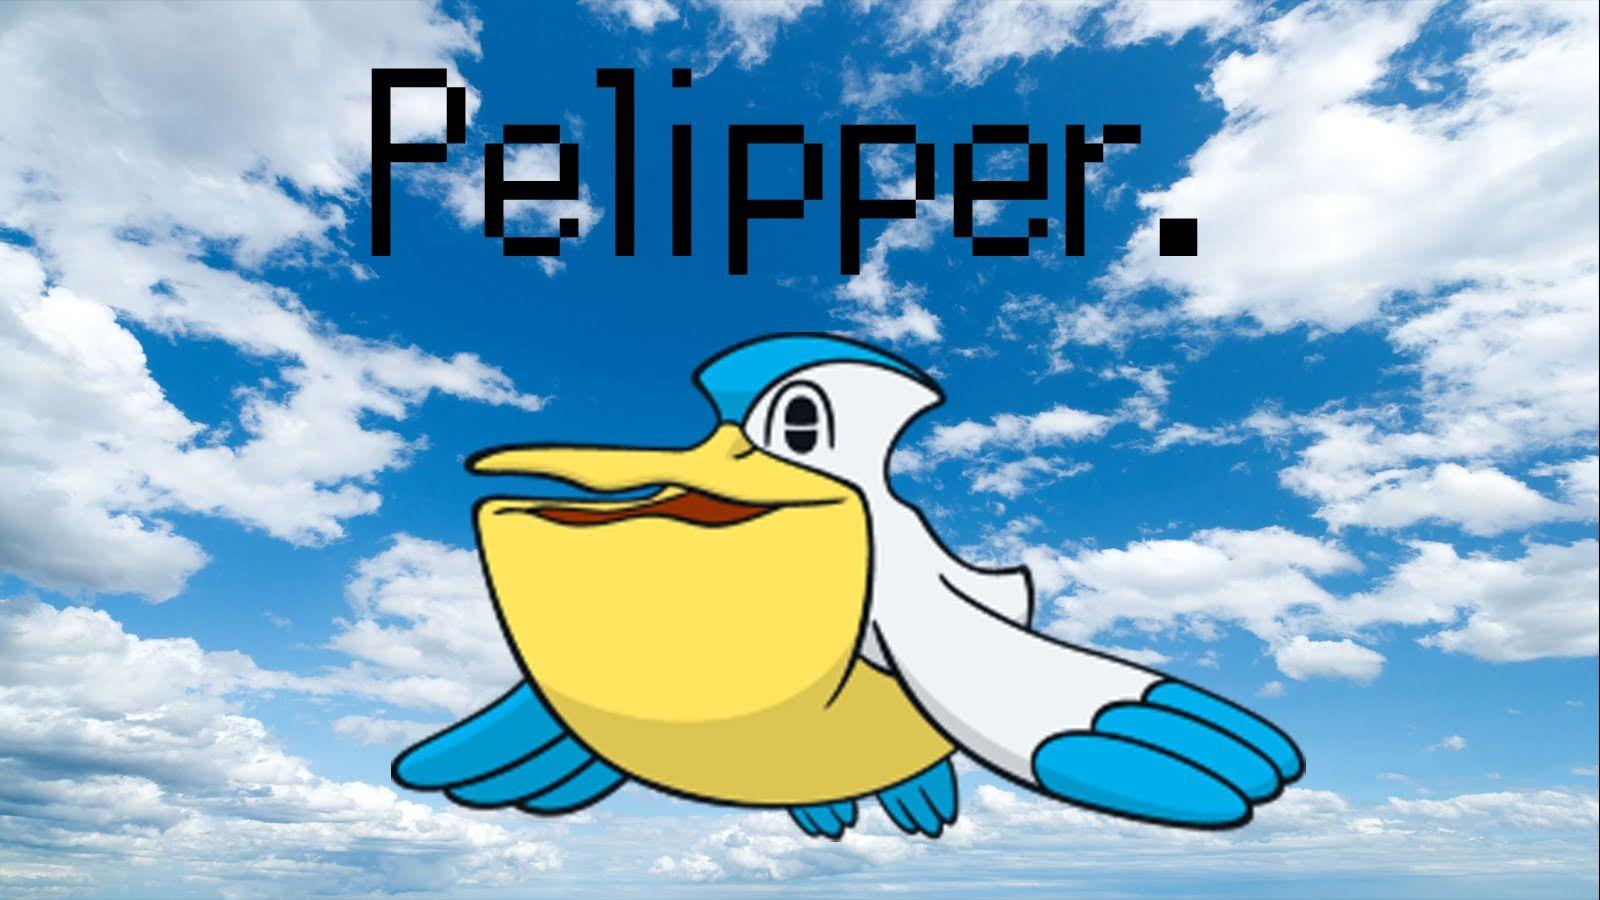 pelipper